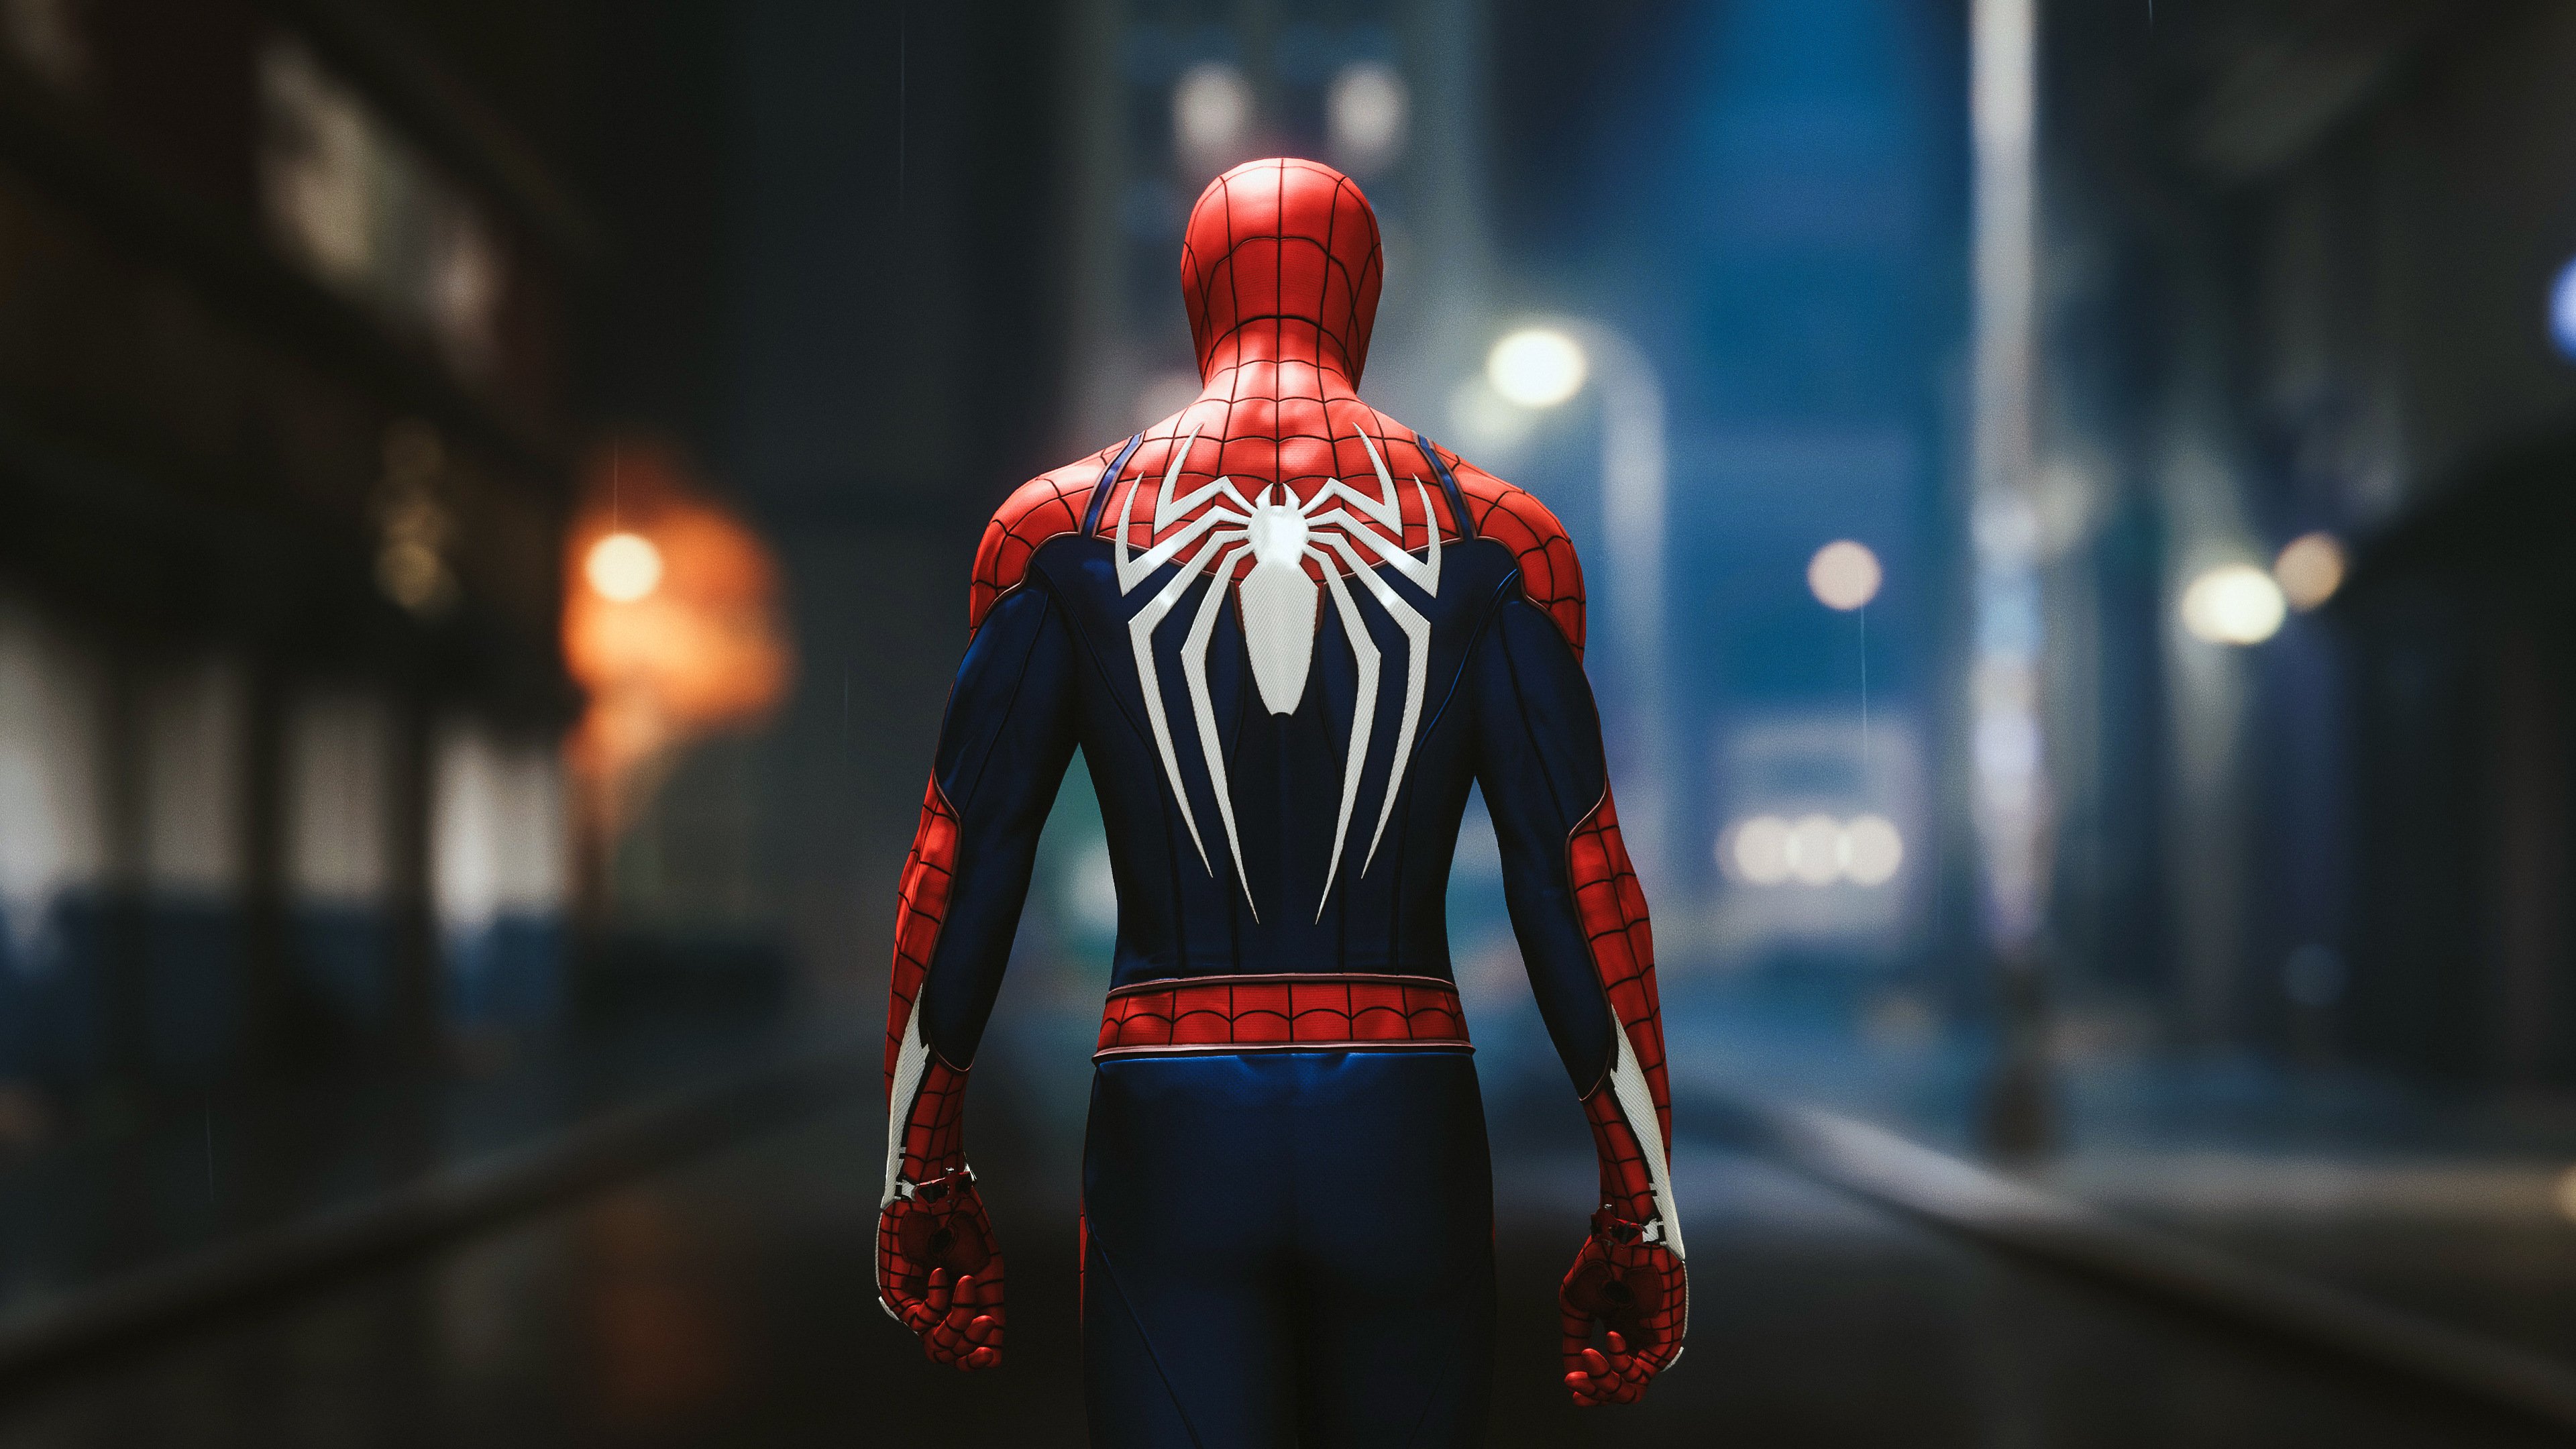 Spider Man (PS4) Advanced Suit 4k Ultra HD Wallpaper